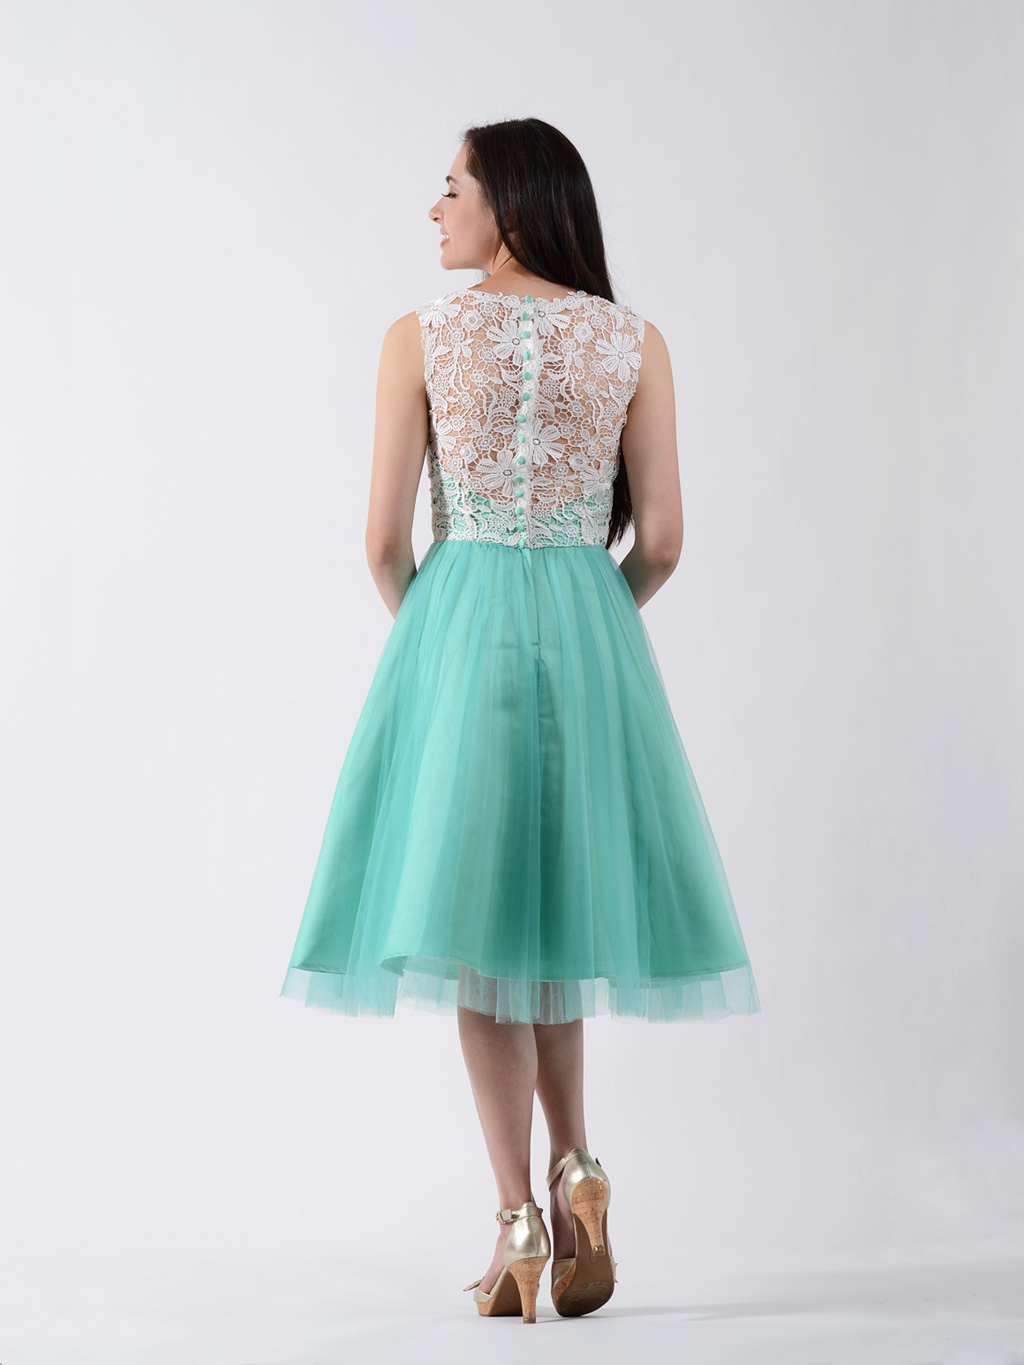 Dress Emerald : Beautiful And Elegant